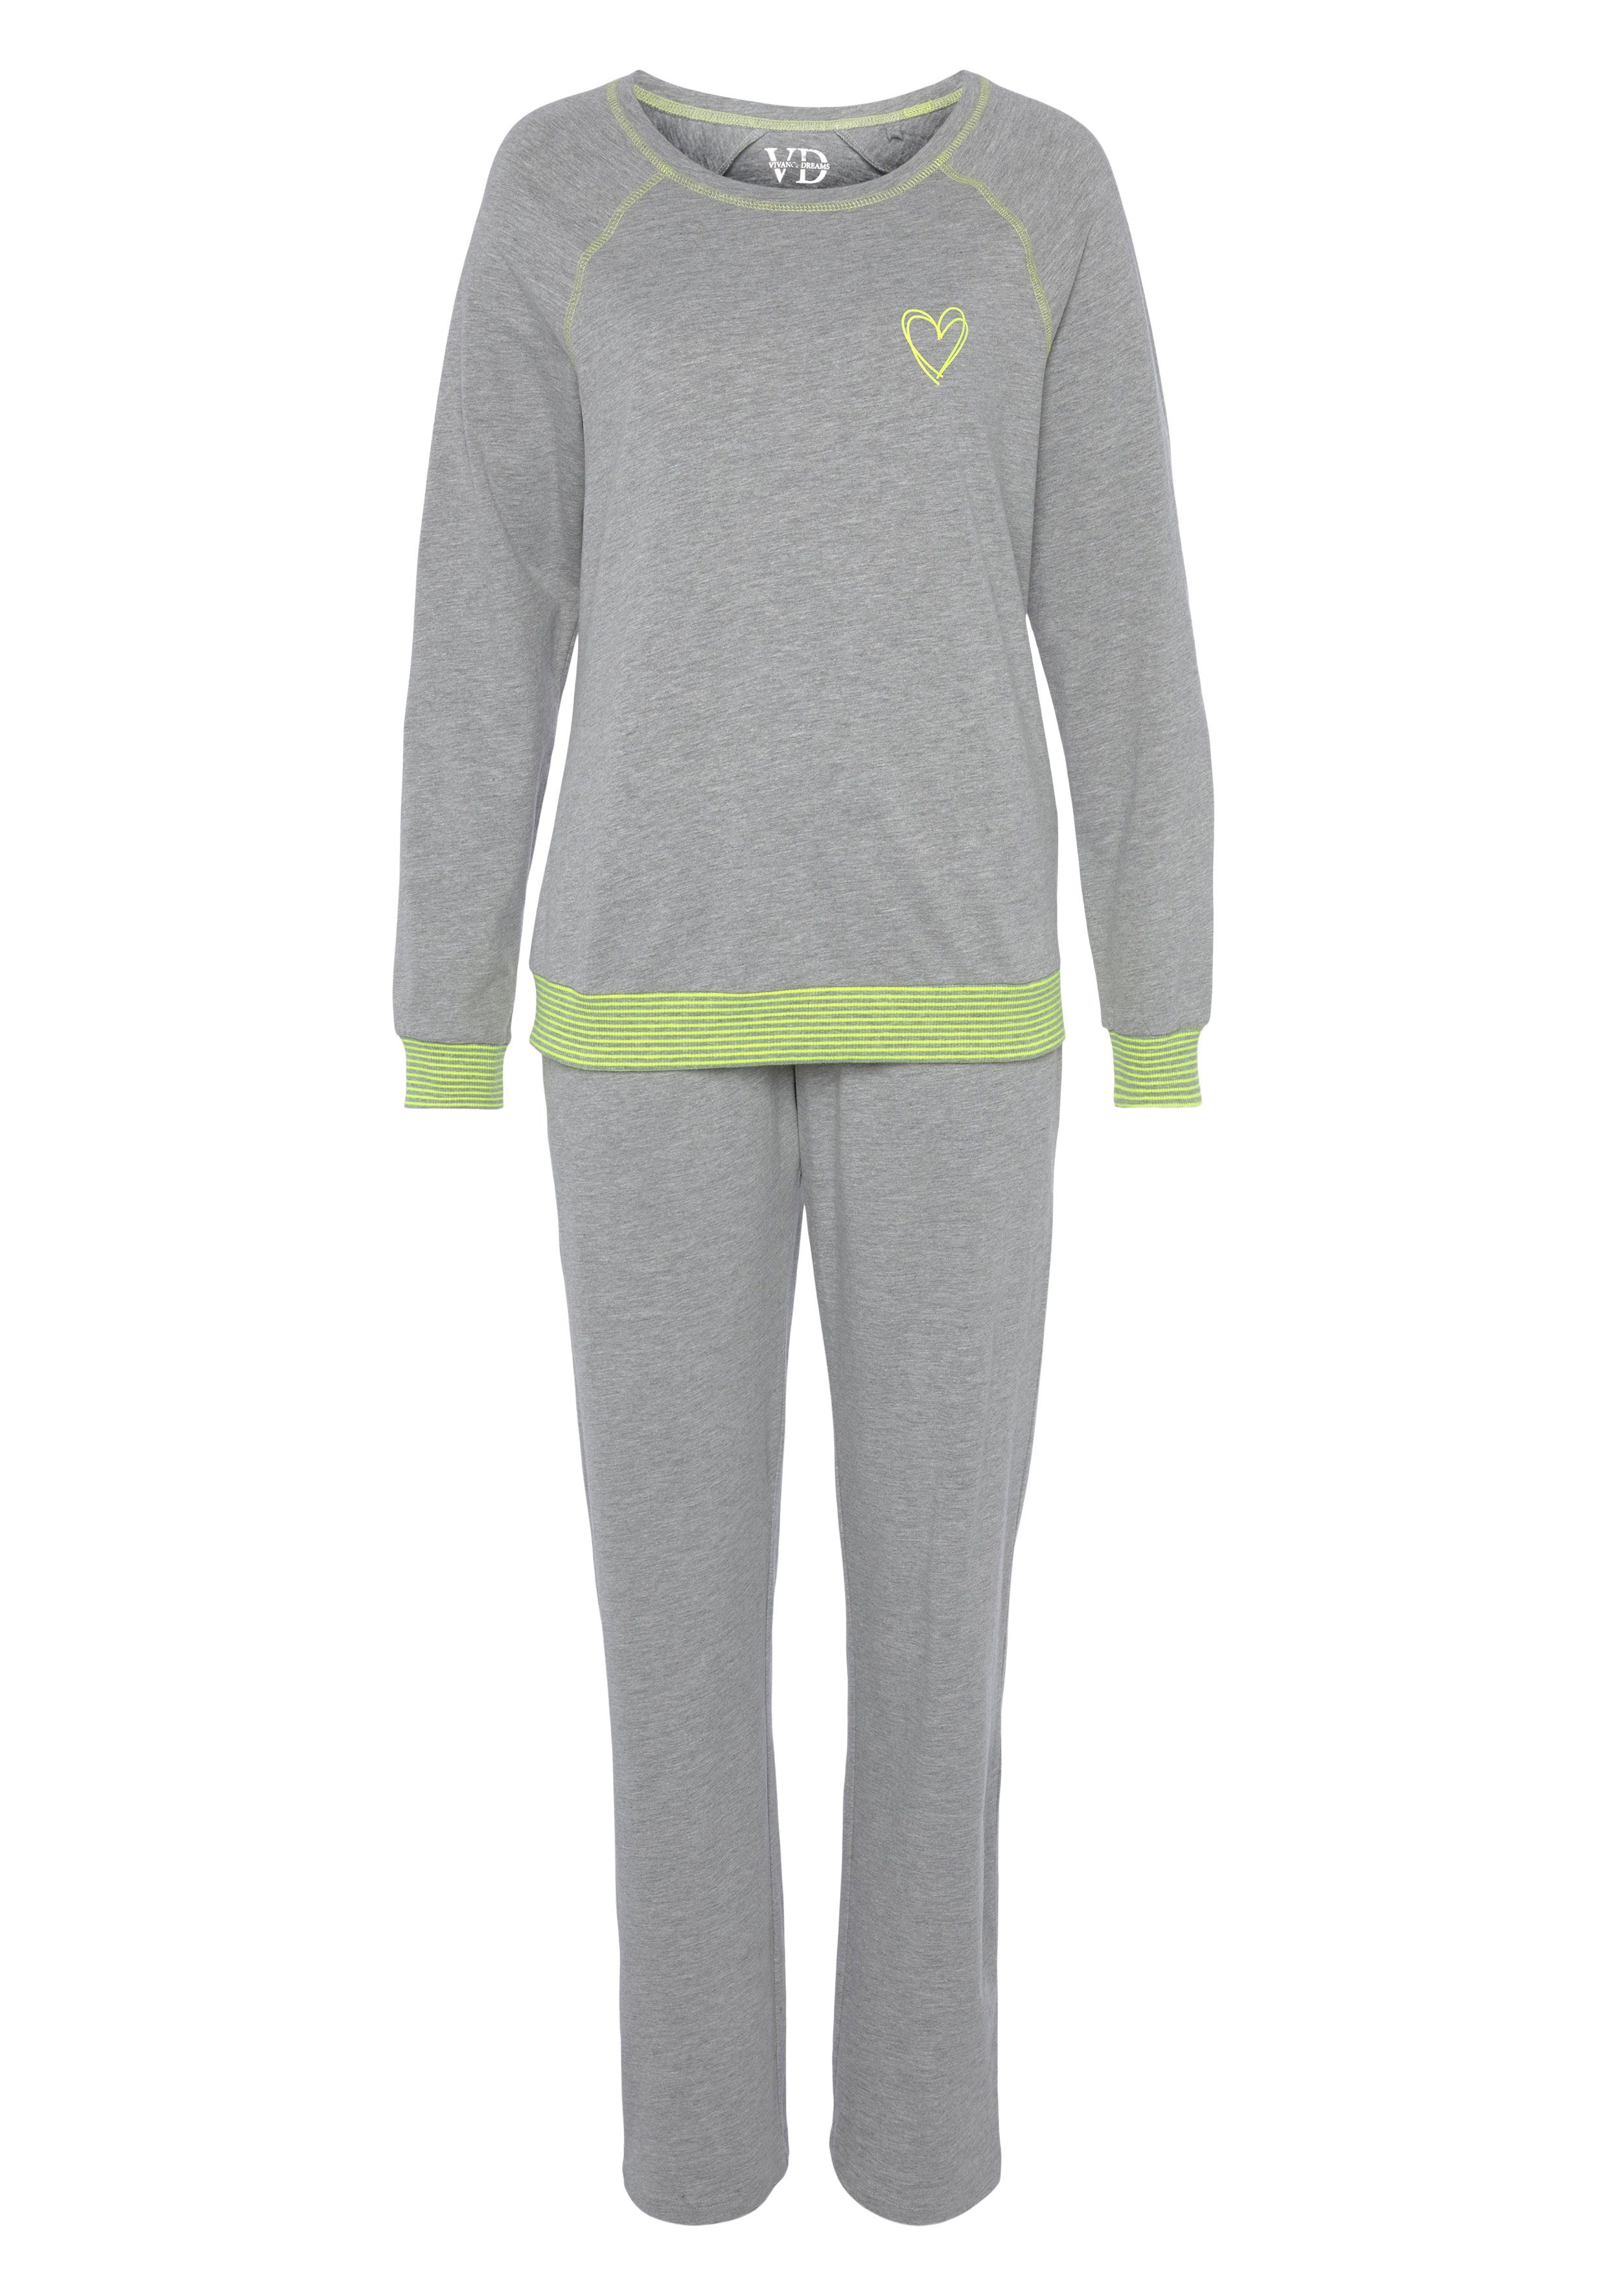 Vivance Dreams Pyjama (2 Neonfarben tlg) dekorativen in Flatlock-Nähten mit grau/neon-gelb